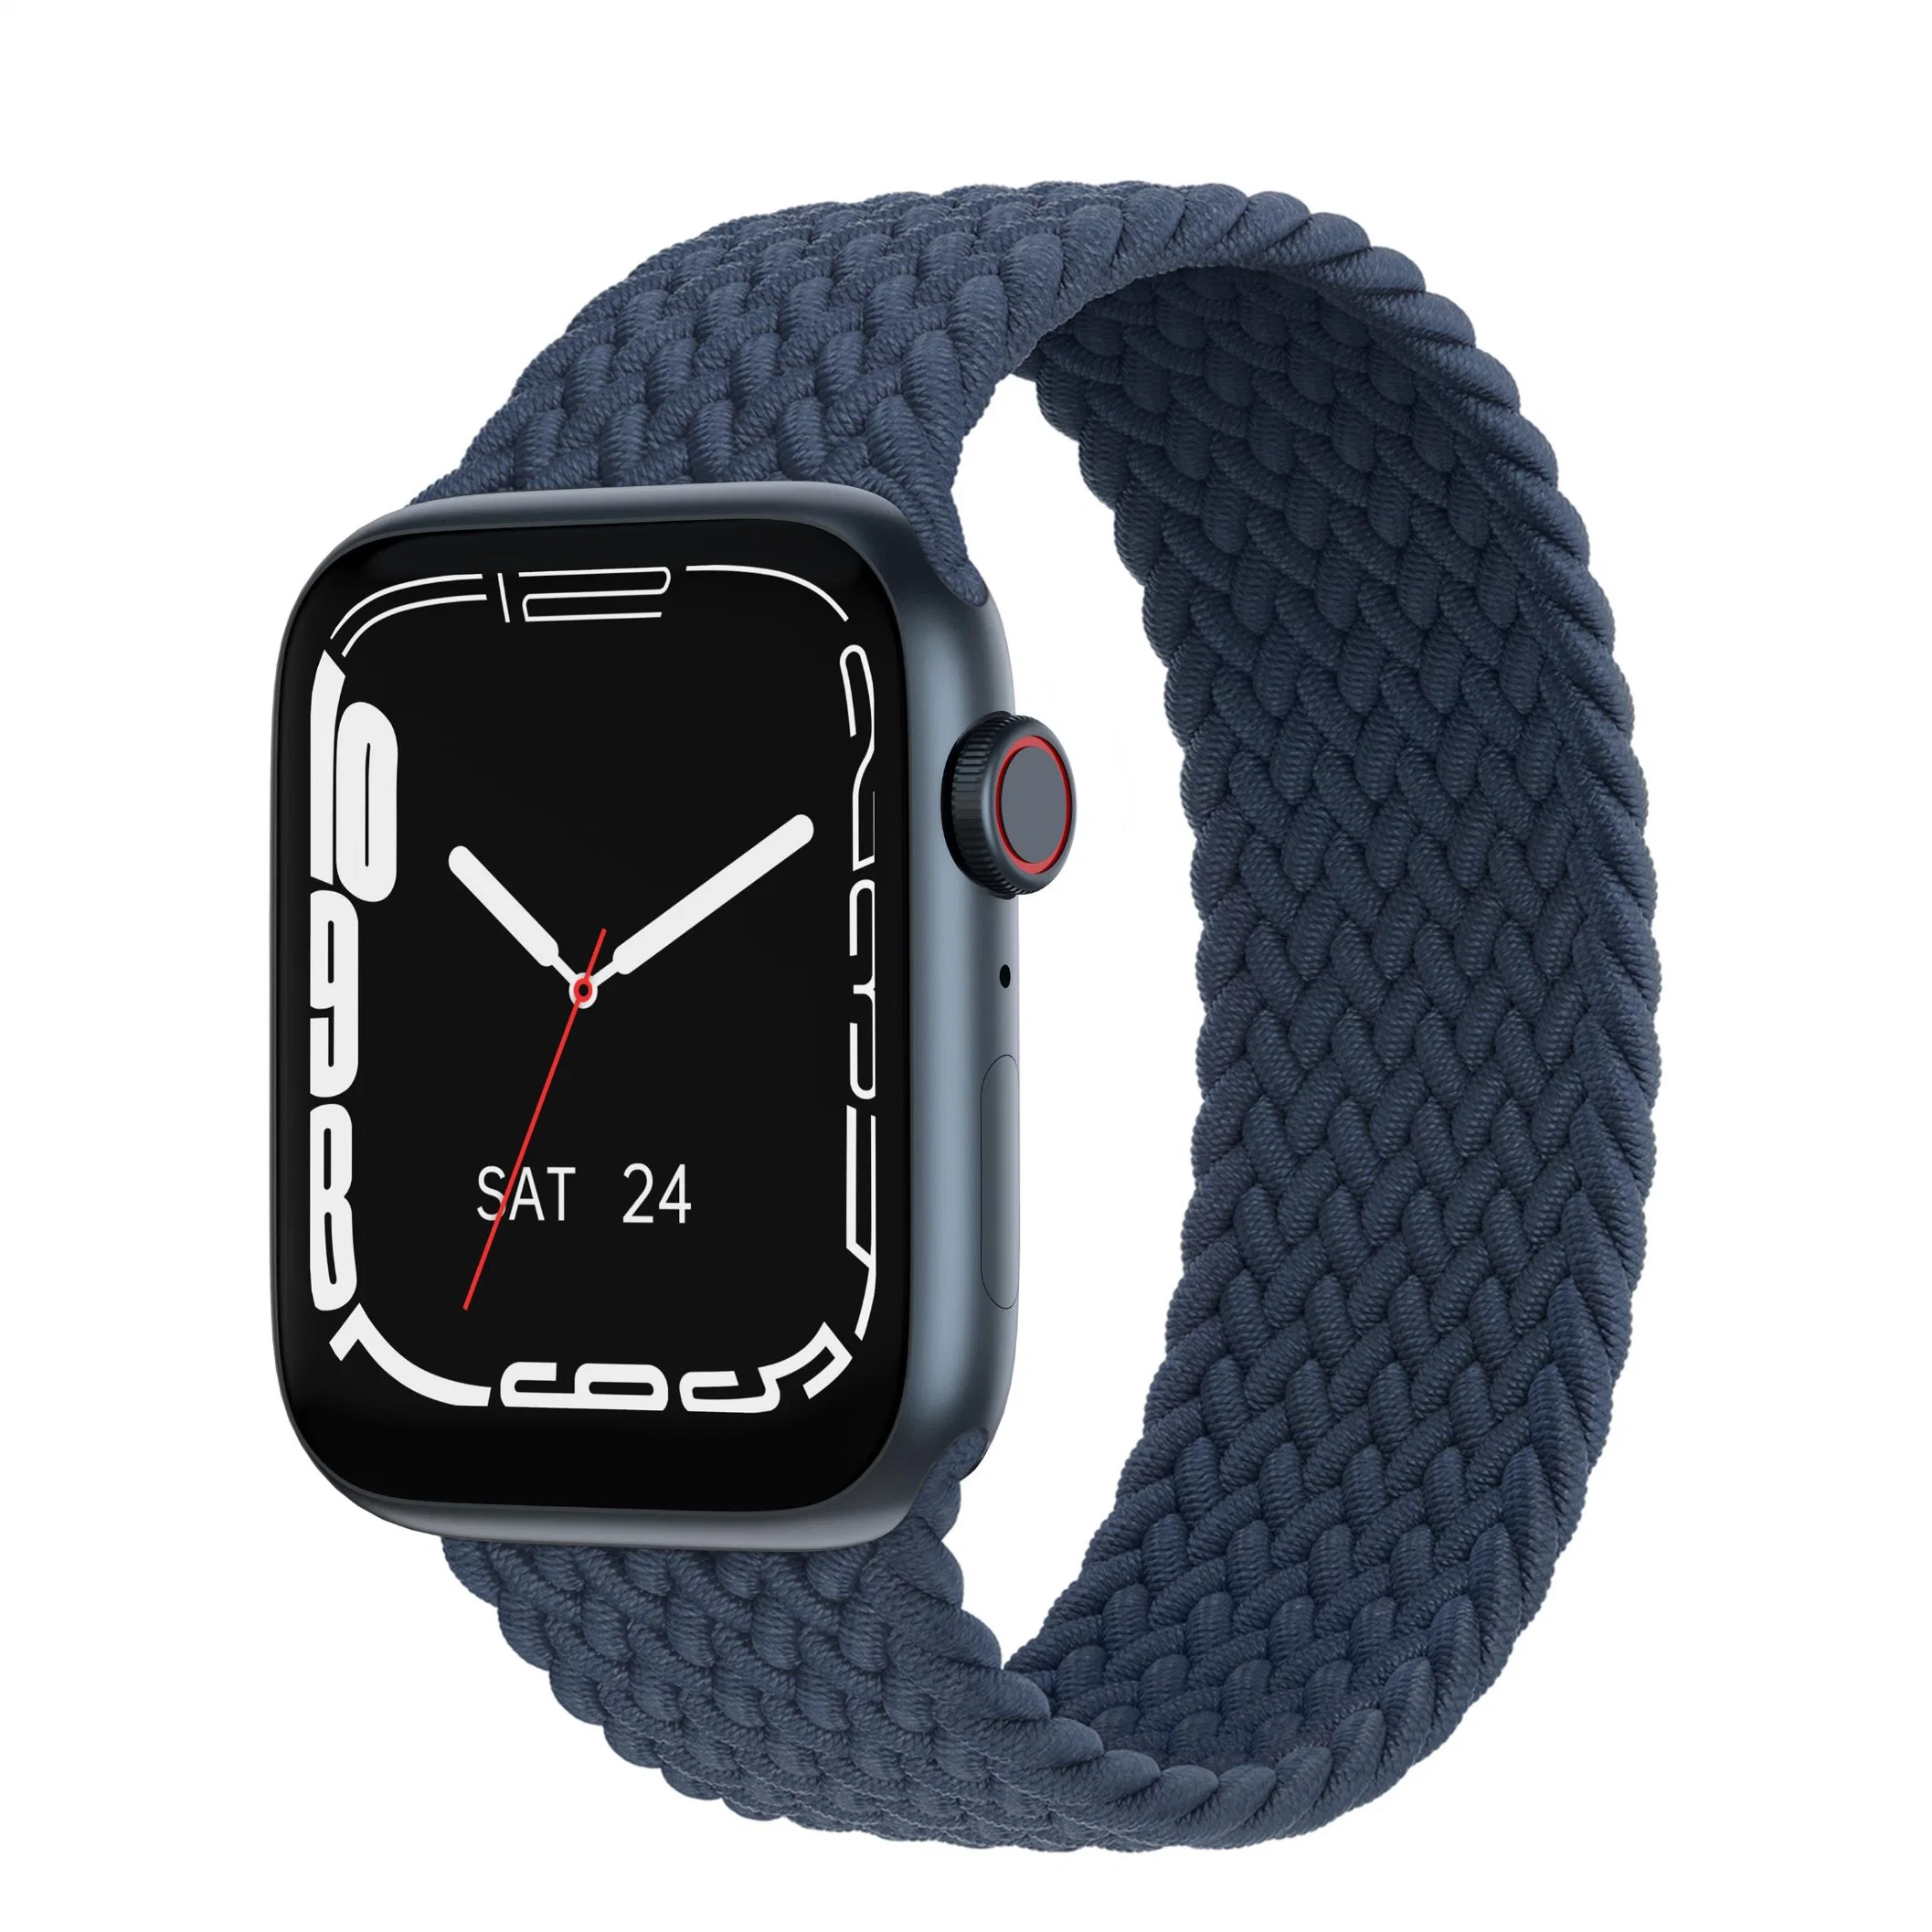 Portable Gifting Watch Comfortable Wearing Bracelet Watch Smart Tracker Bluetooth Fitness Smartwatch